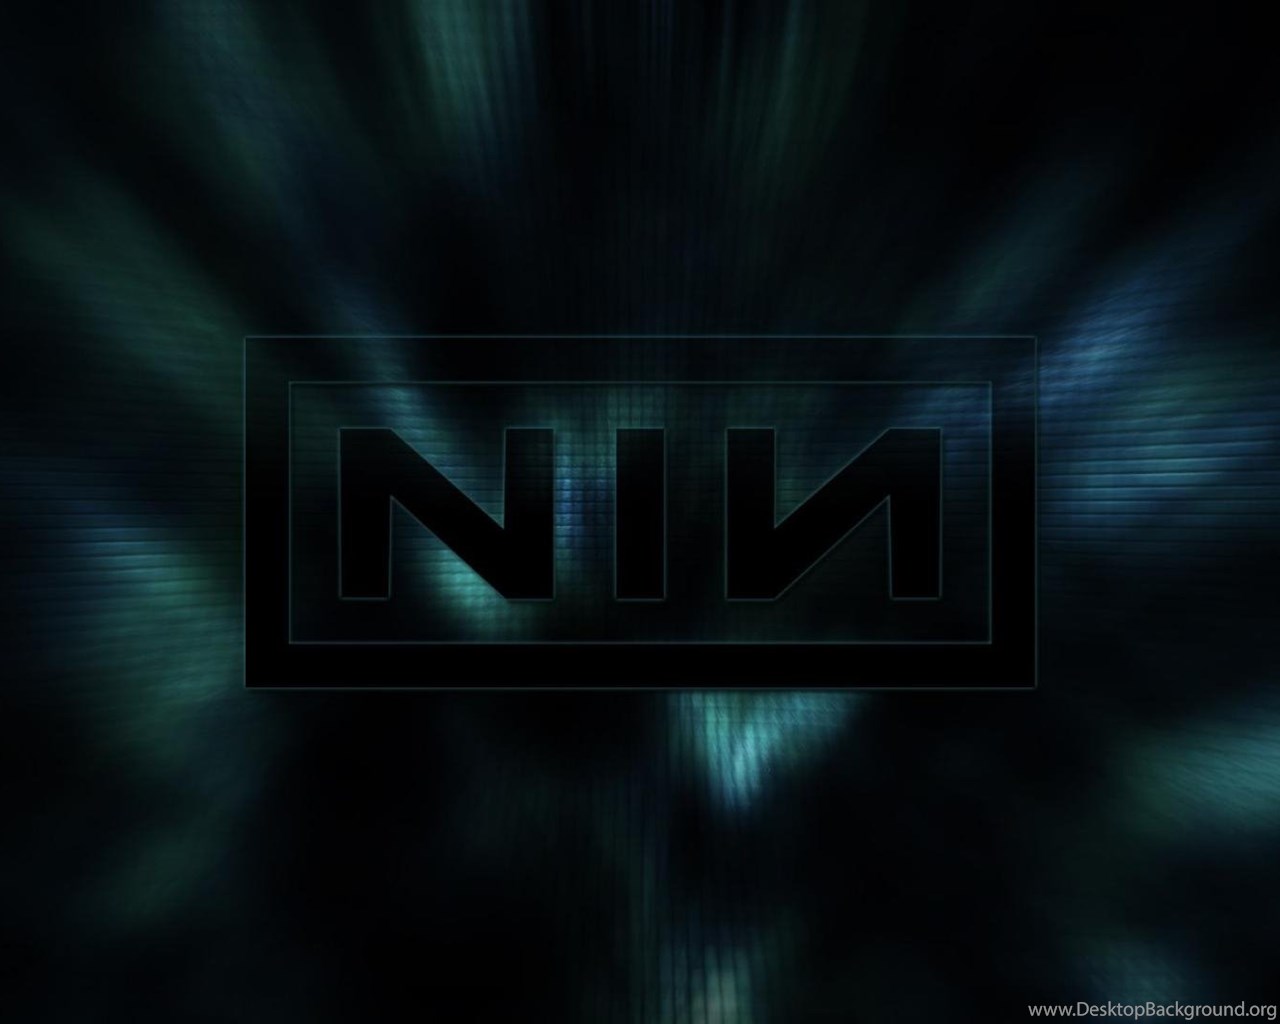 Nine Inch Nails Logo Flag